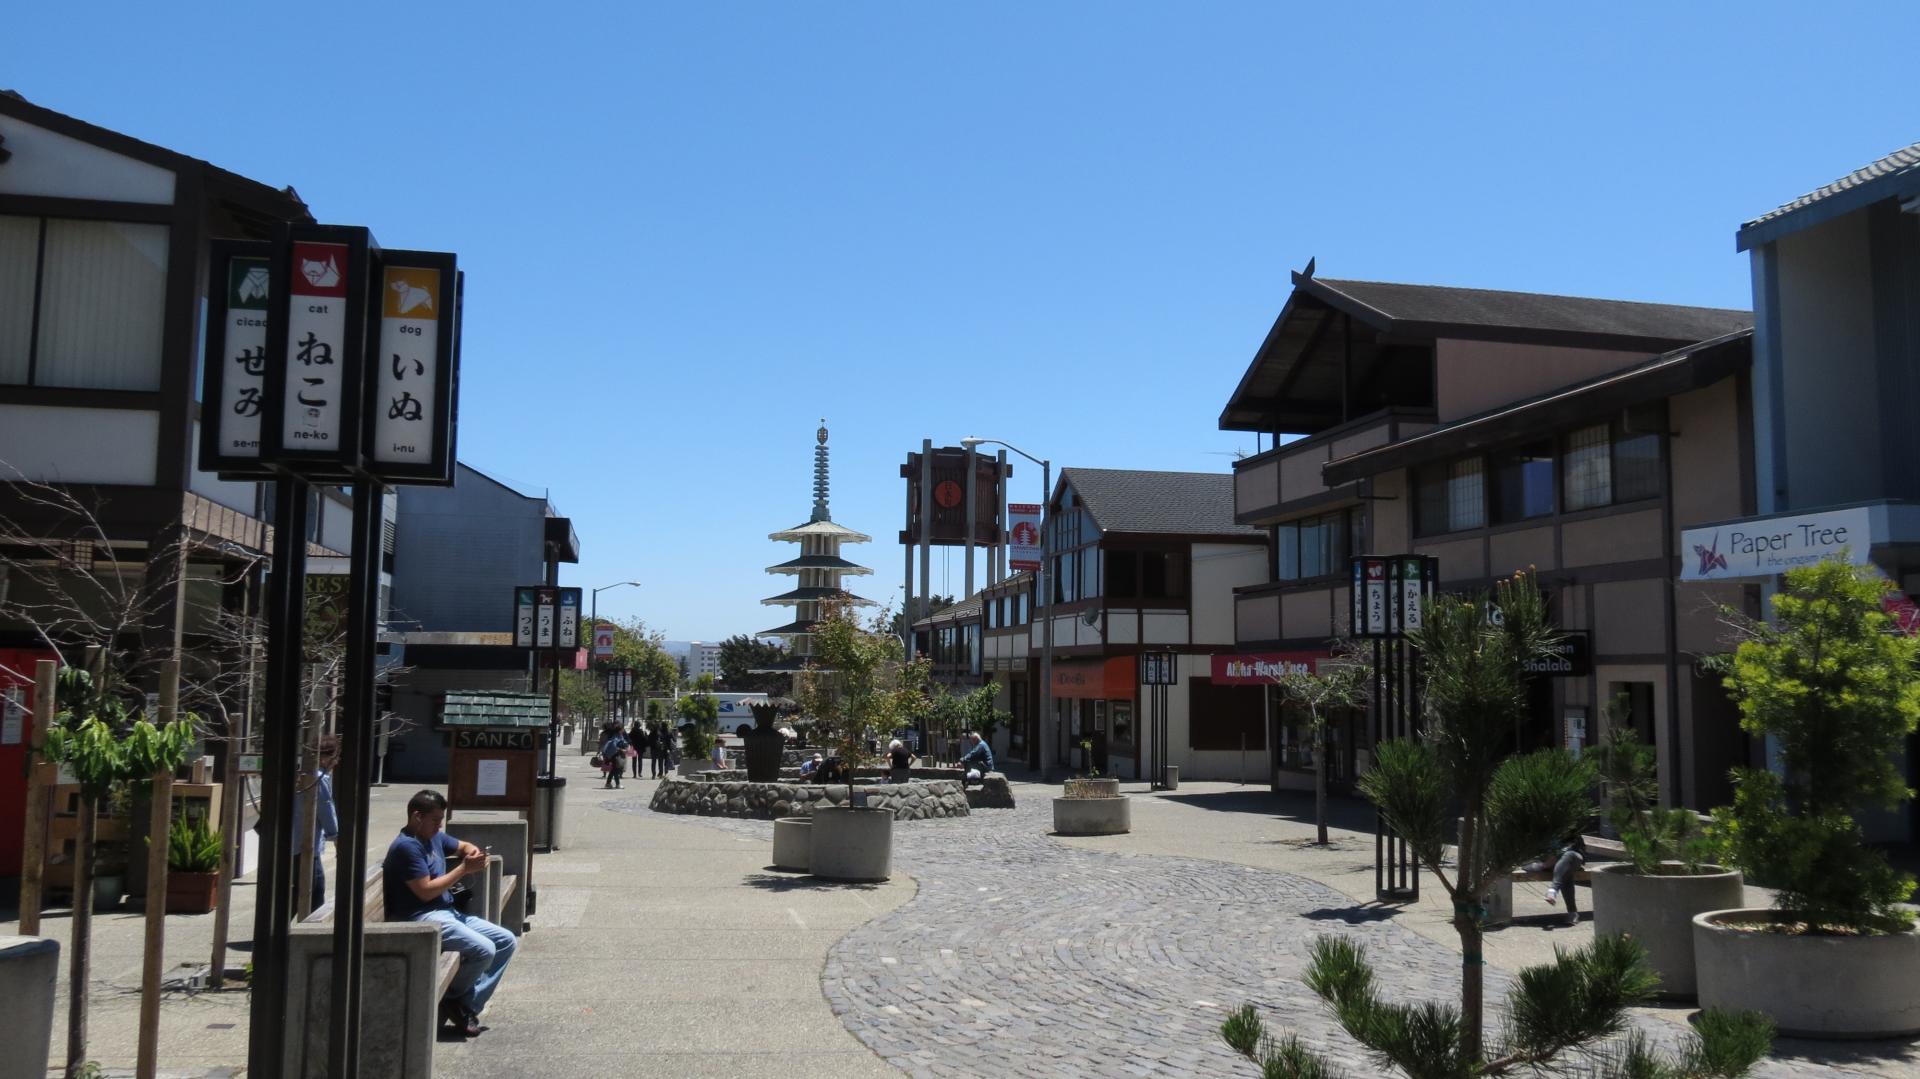 San francisco japan town 3